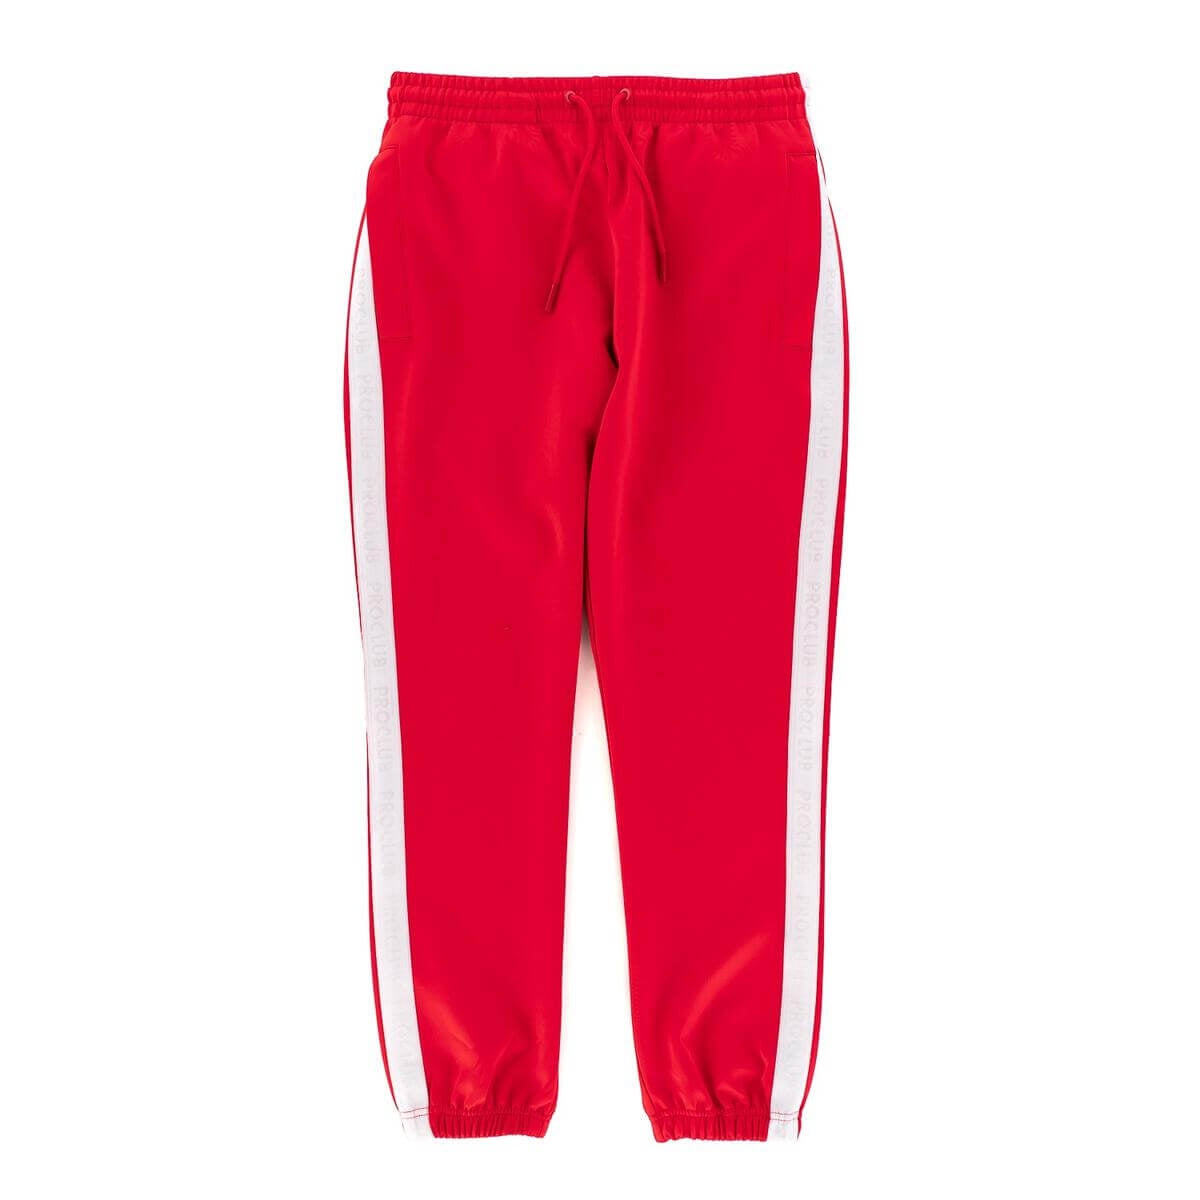 Pro Club Stripe Track Pants - Red